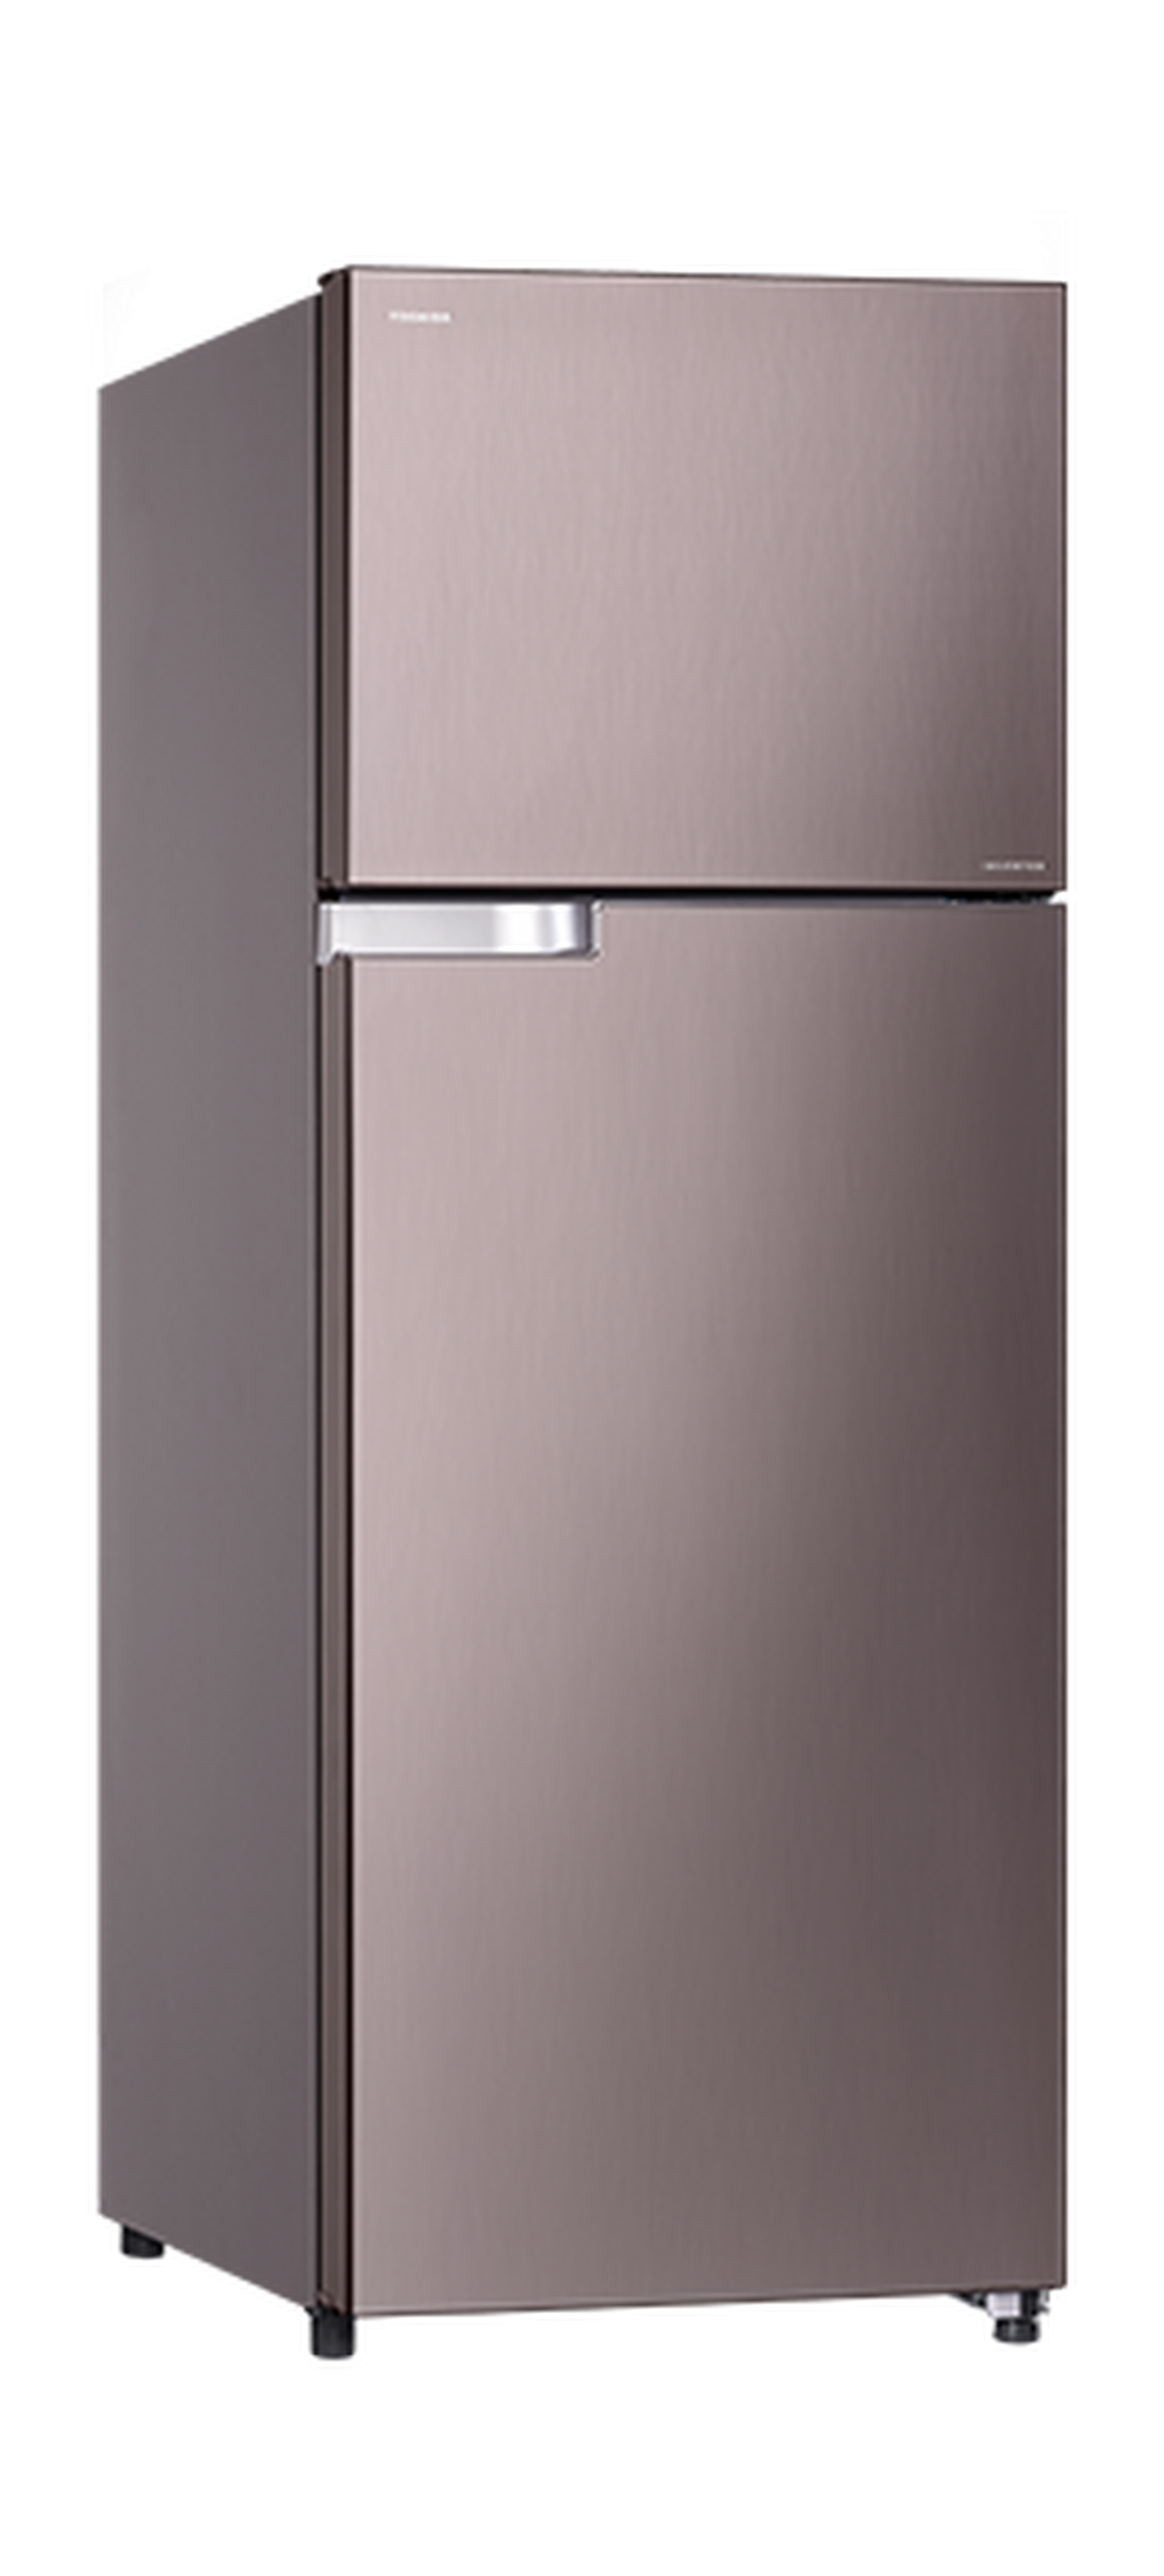 Toshiba 18 Cft. Top Freezer Refrigerator (GR-T565UBZ) – Reddish Gold